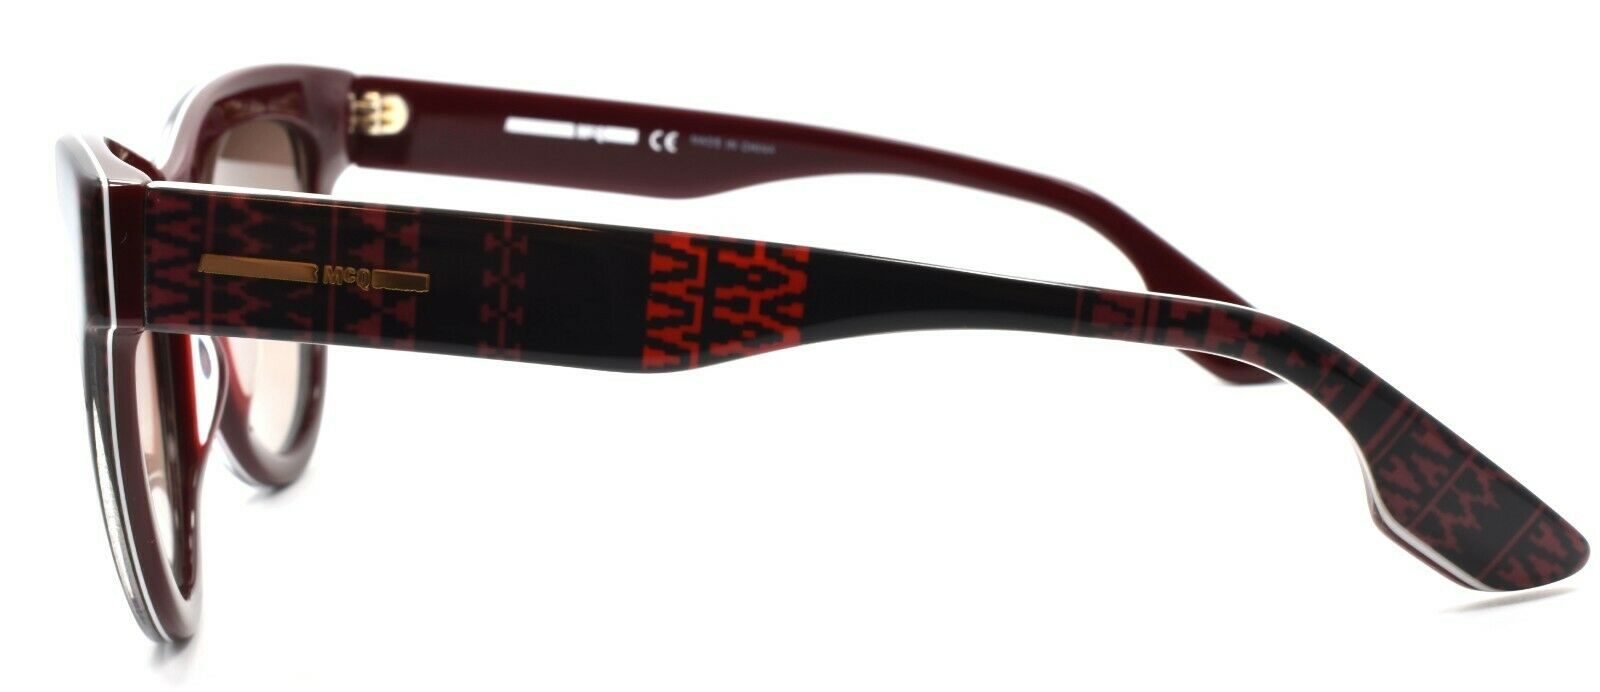 3-McQ Alexander McQueen MQ0043S 005 Women's Sunglasses Cat Eye Black & Red / Brown-889652032207-IKSpecs